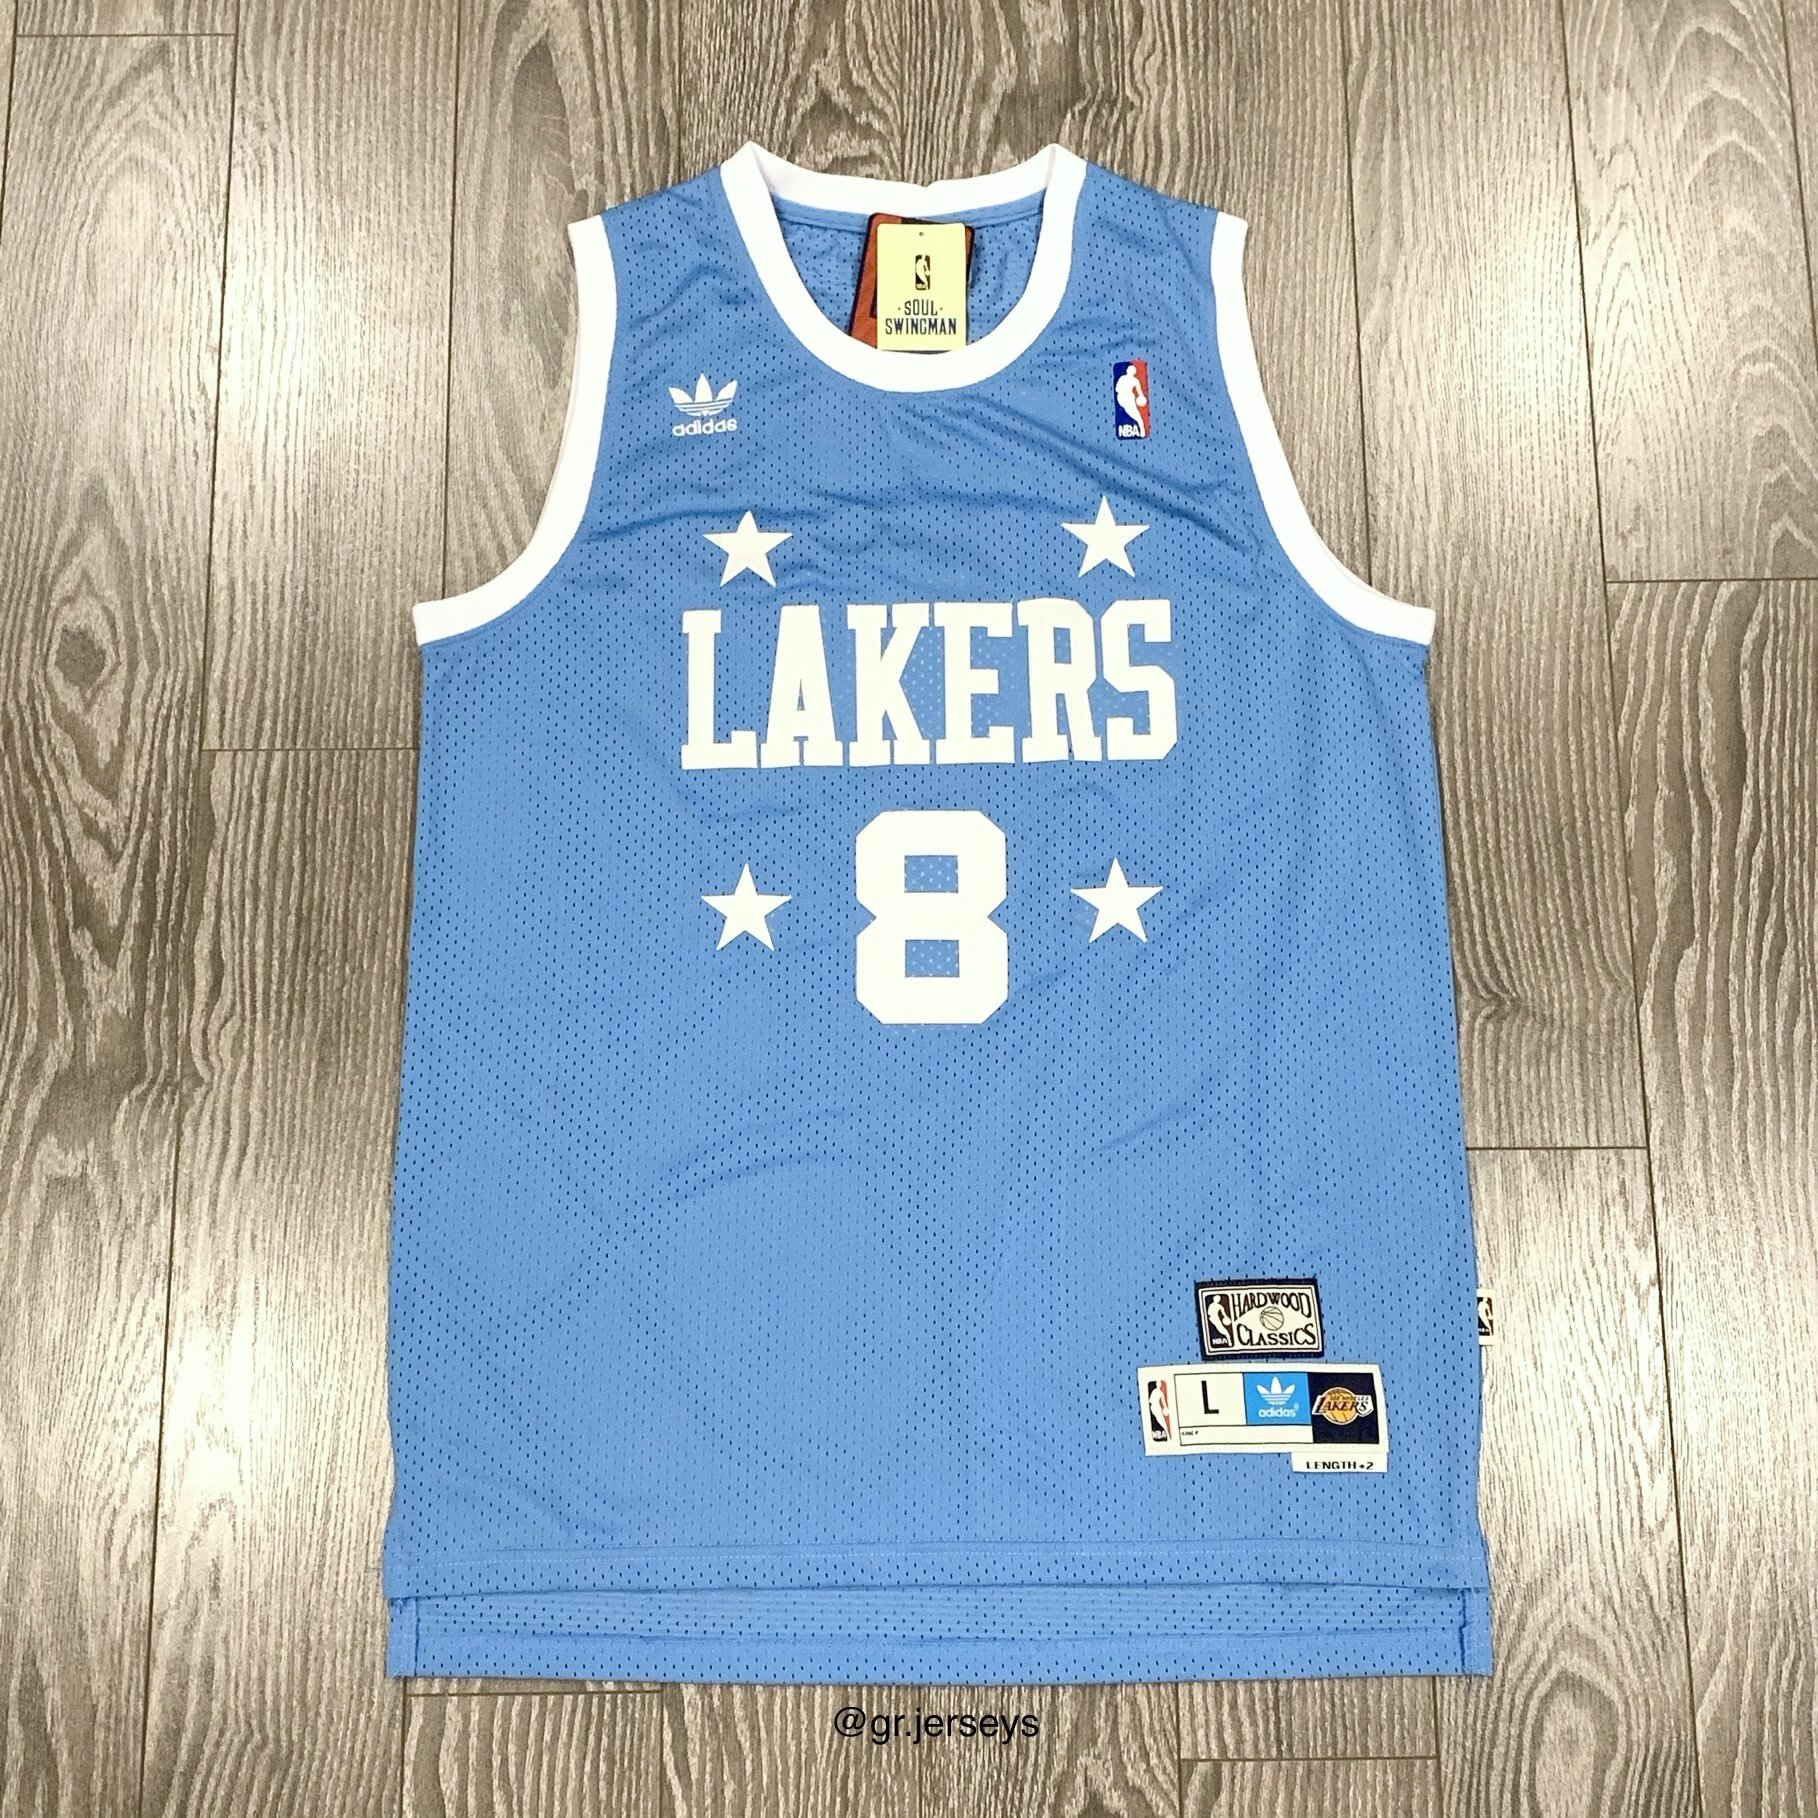 Kobe Bryant #8 Los Angeles Lakers Jersey (Light Blue on Blue)